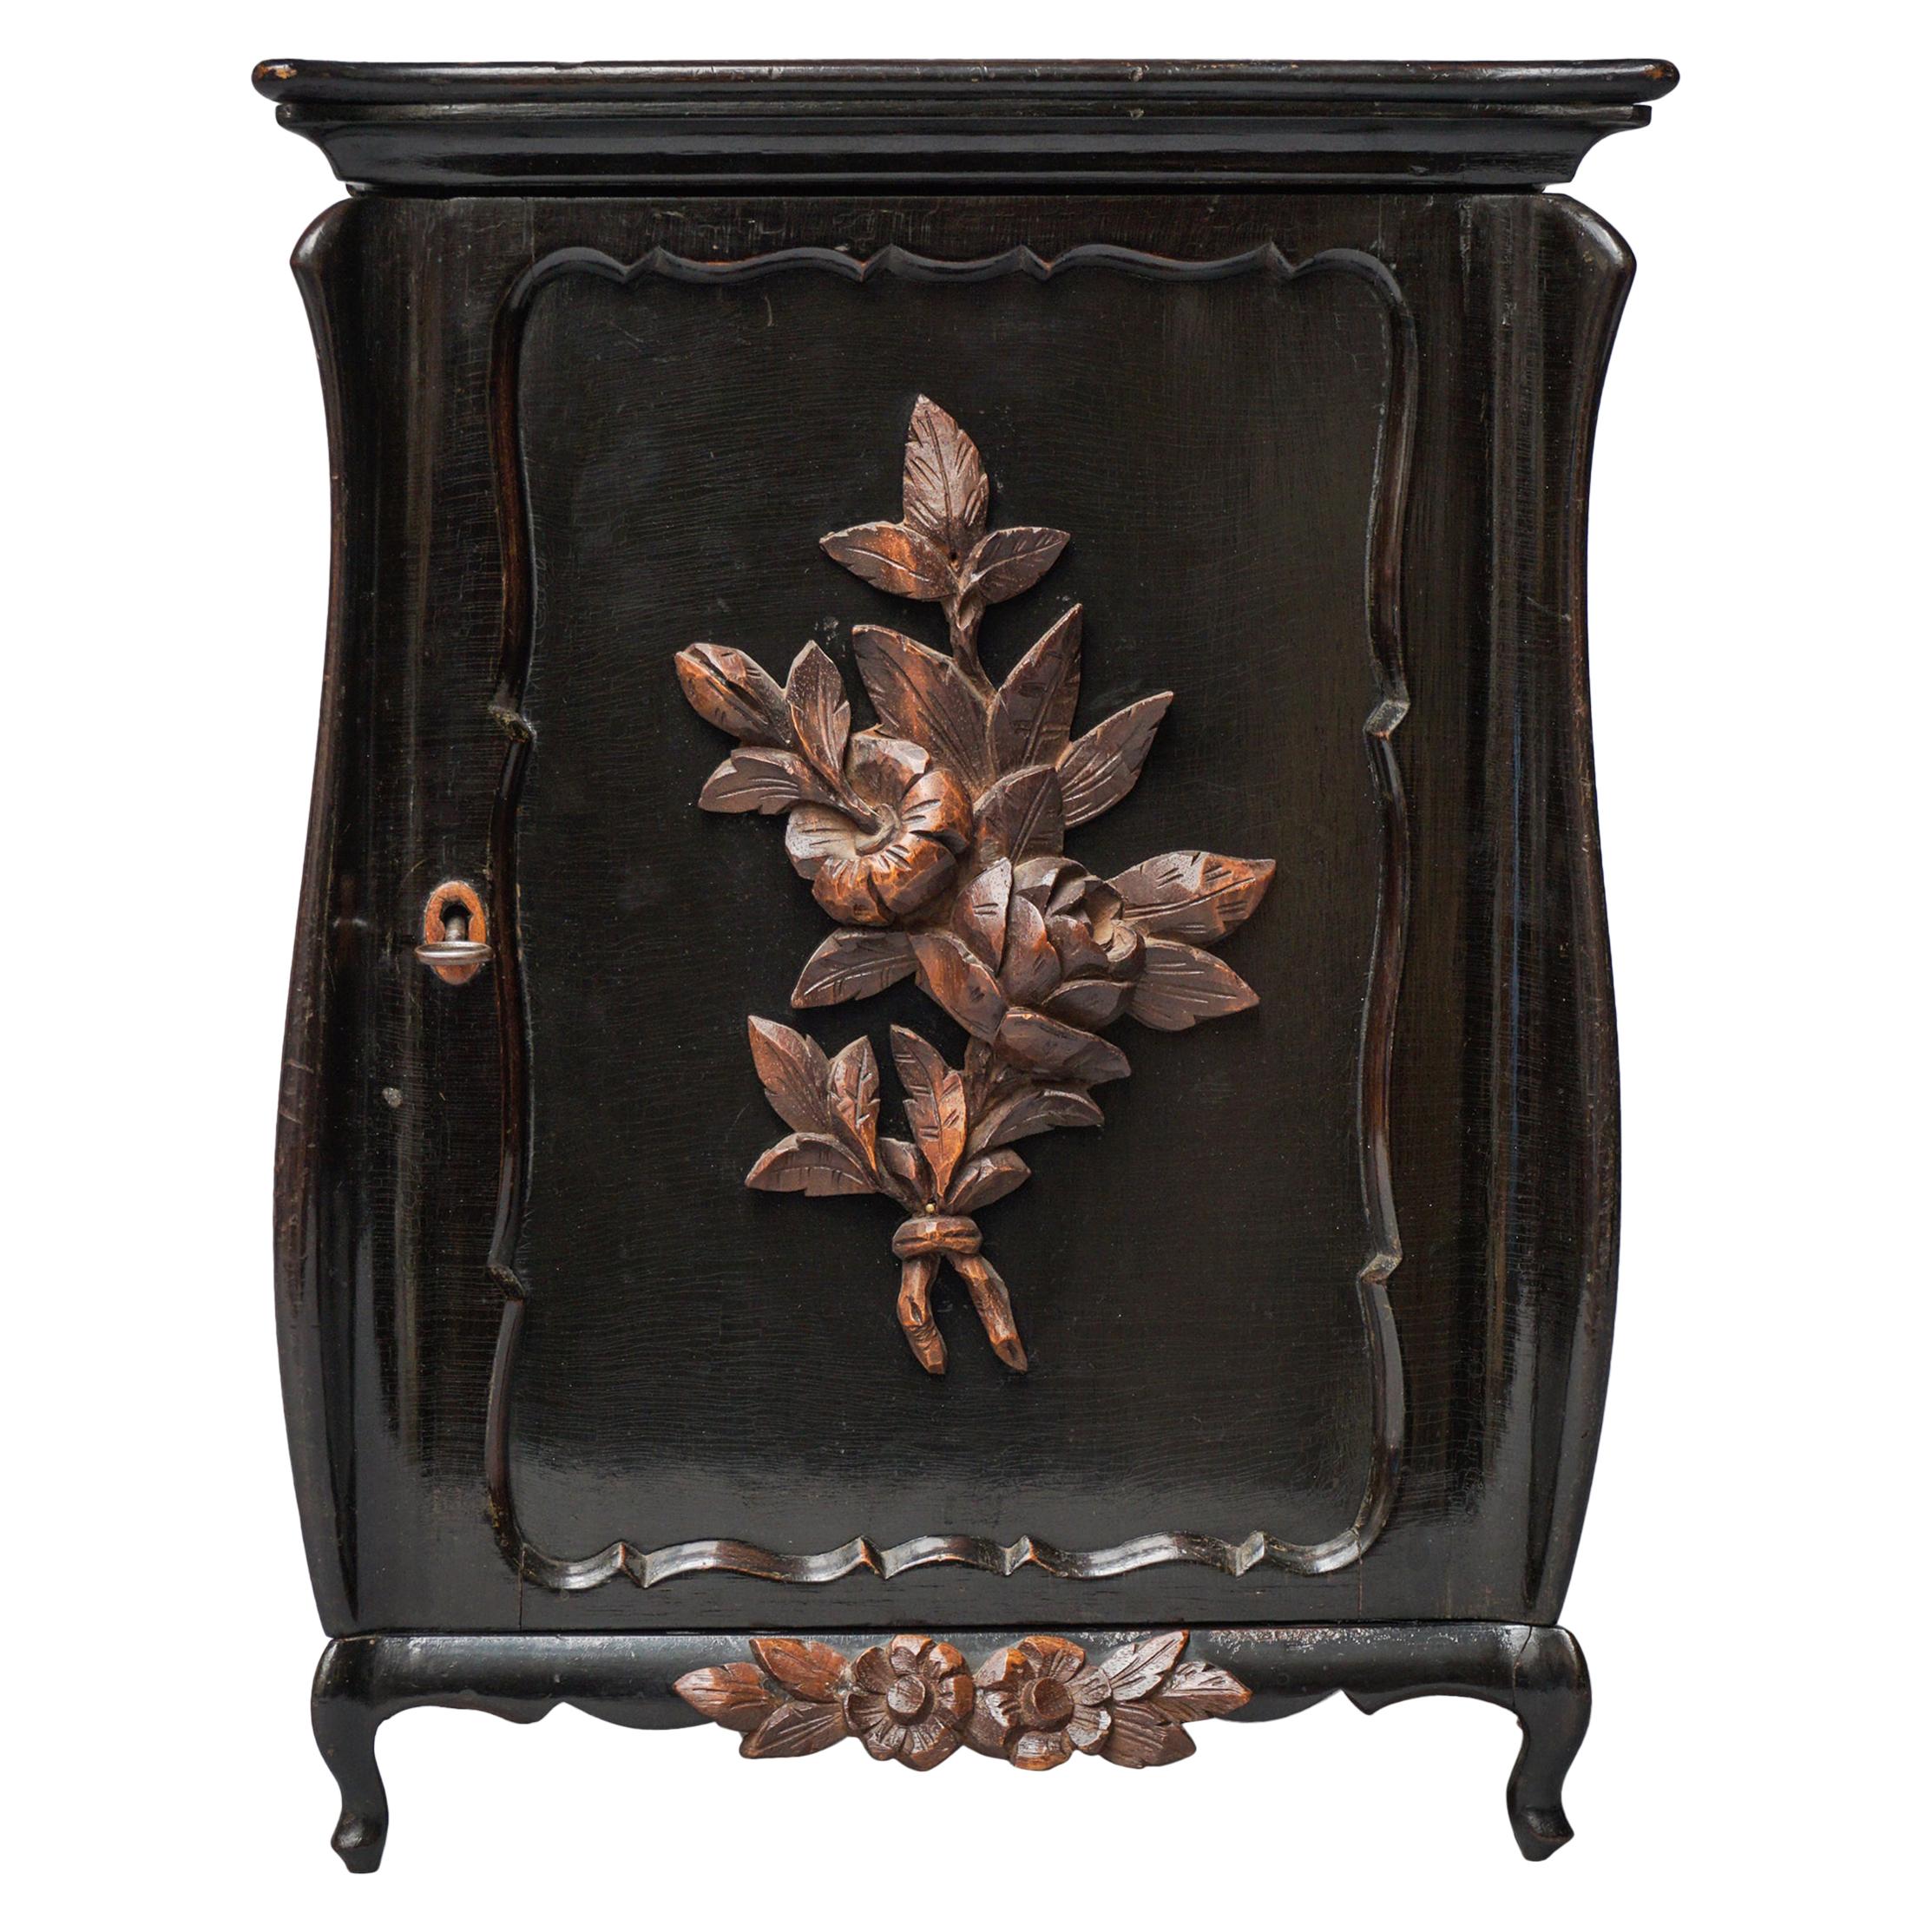 Dutch Blackened Oak, Mahogany and Walnut Wood Cigar Cabinet with Drawers